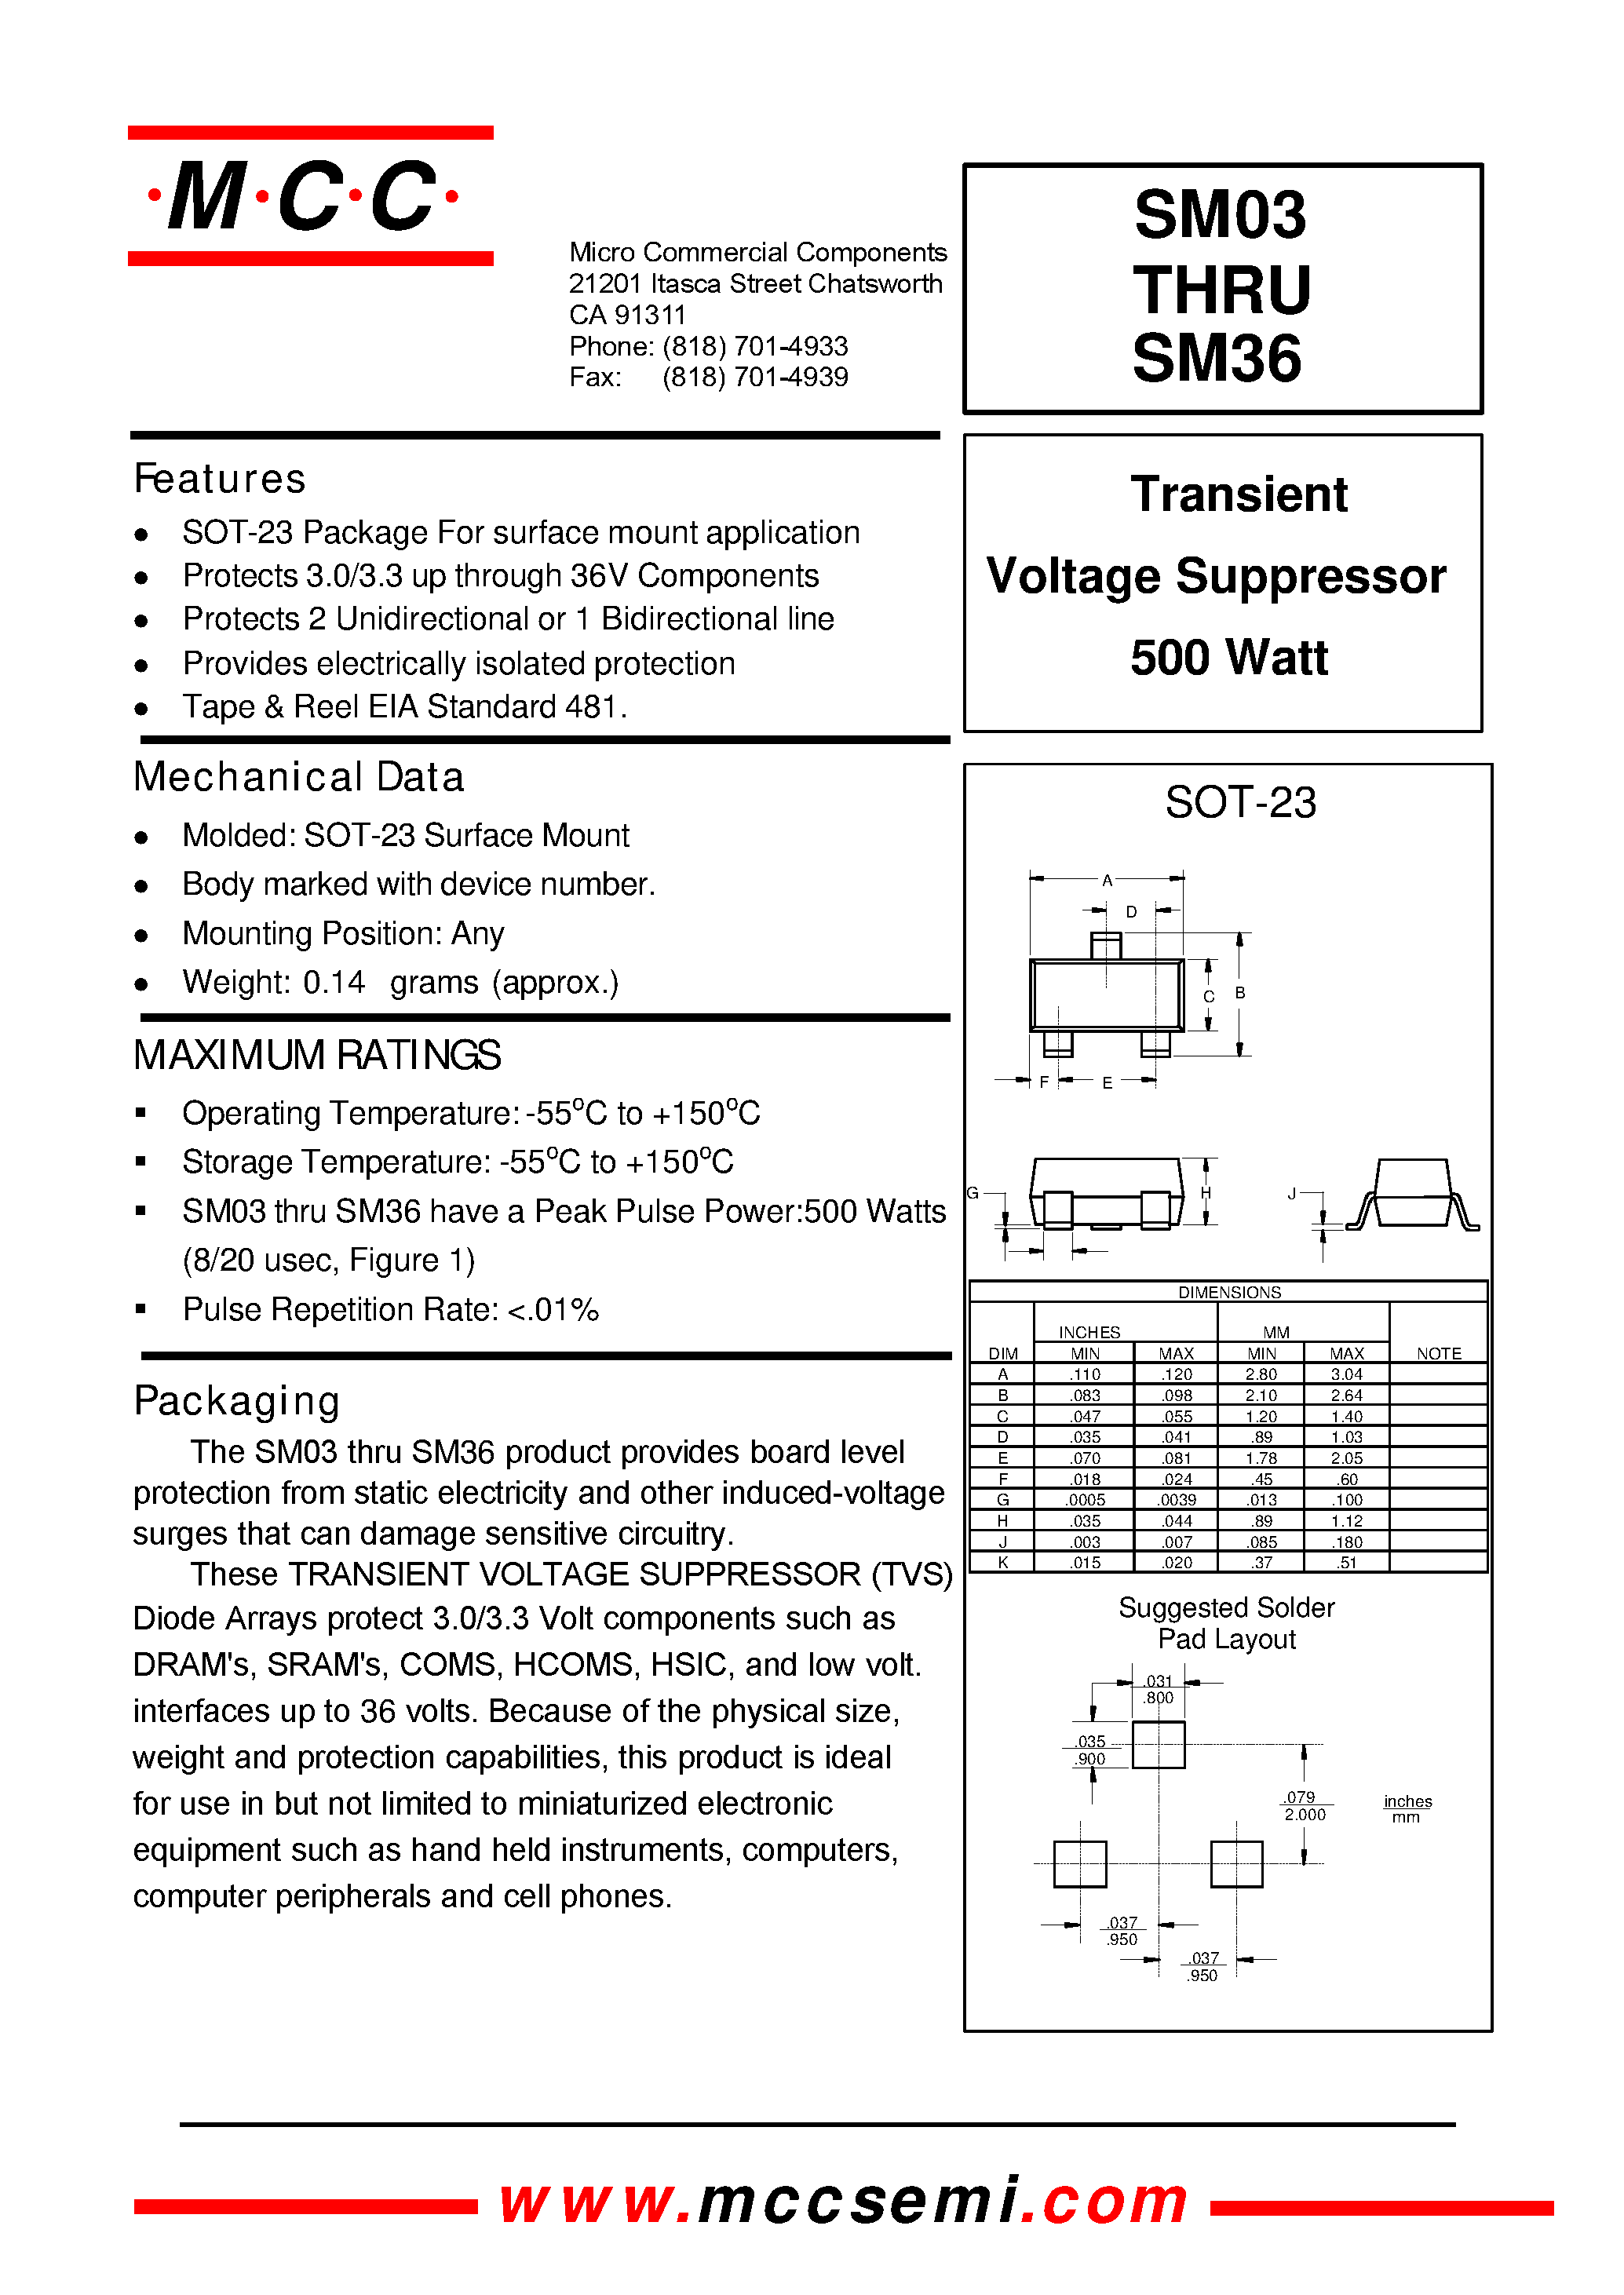 Даташит SM12 - Transient Voltage Suppressor 500 Watt страница 1